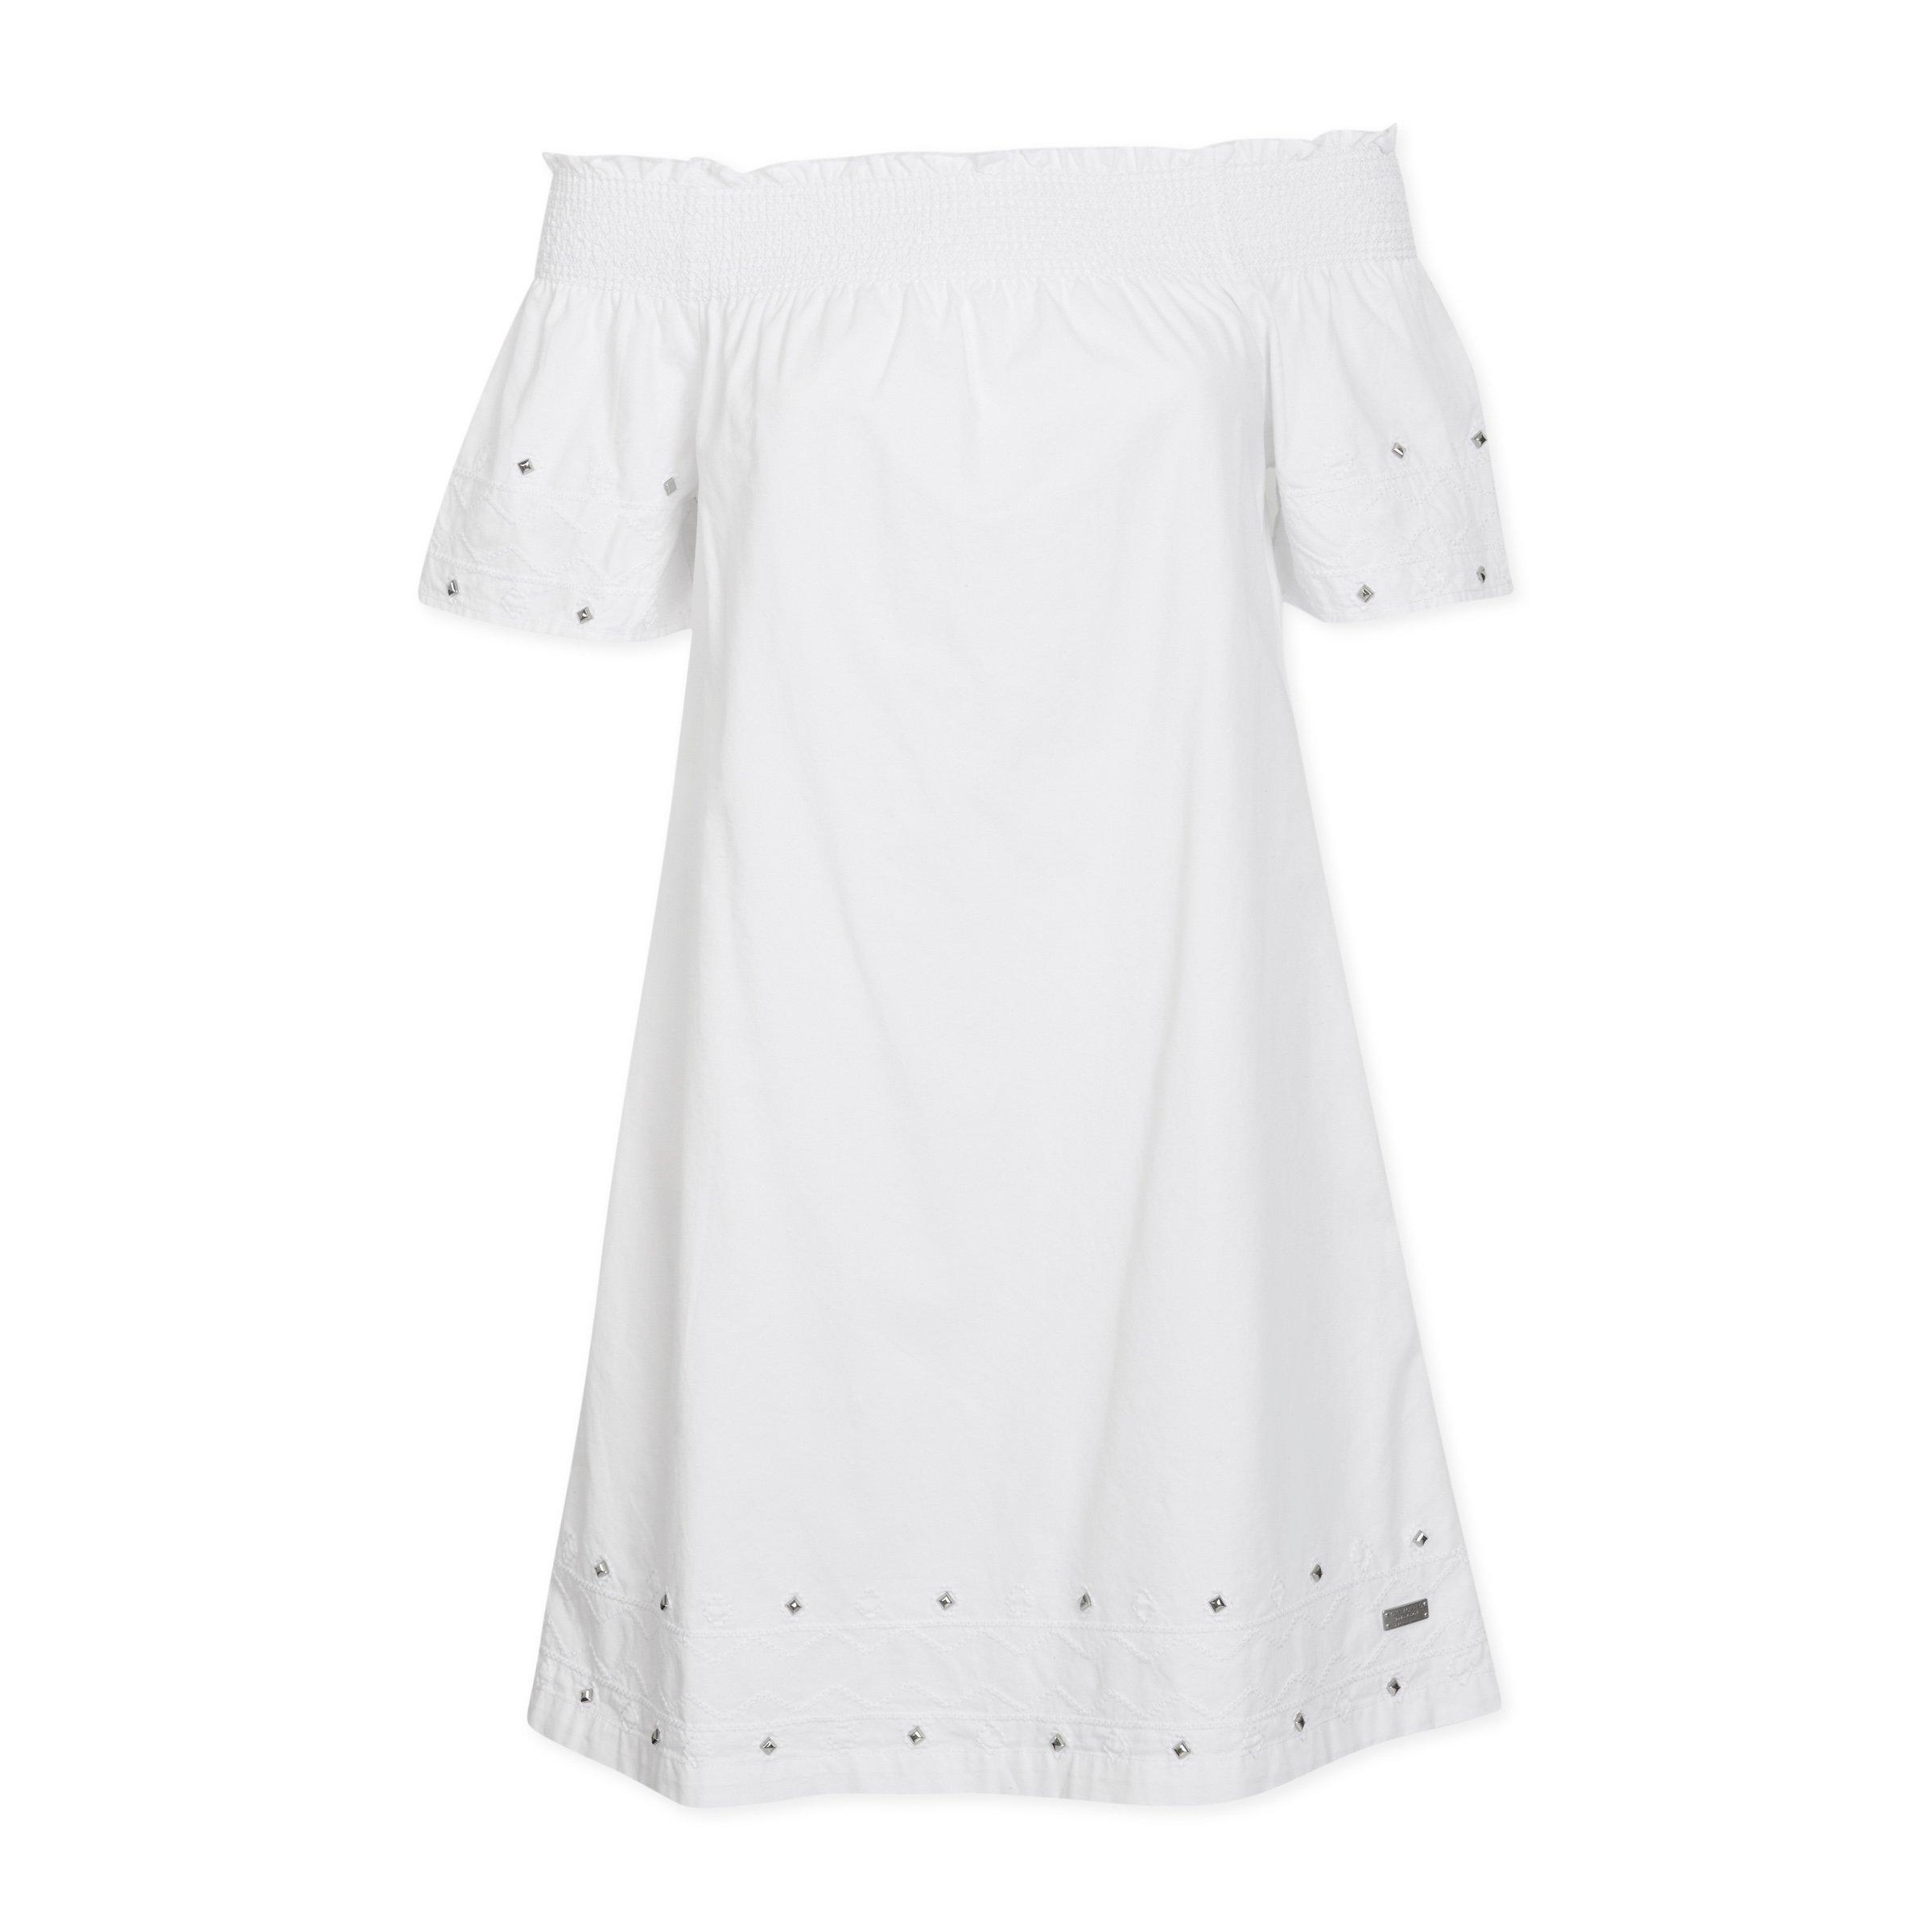 truworths white dresses